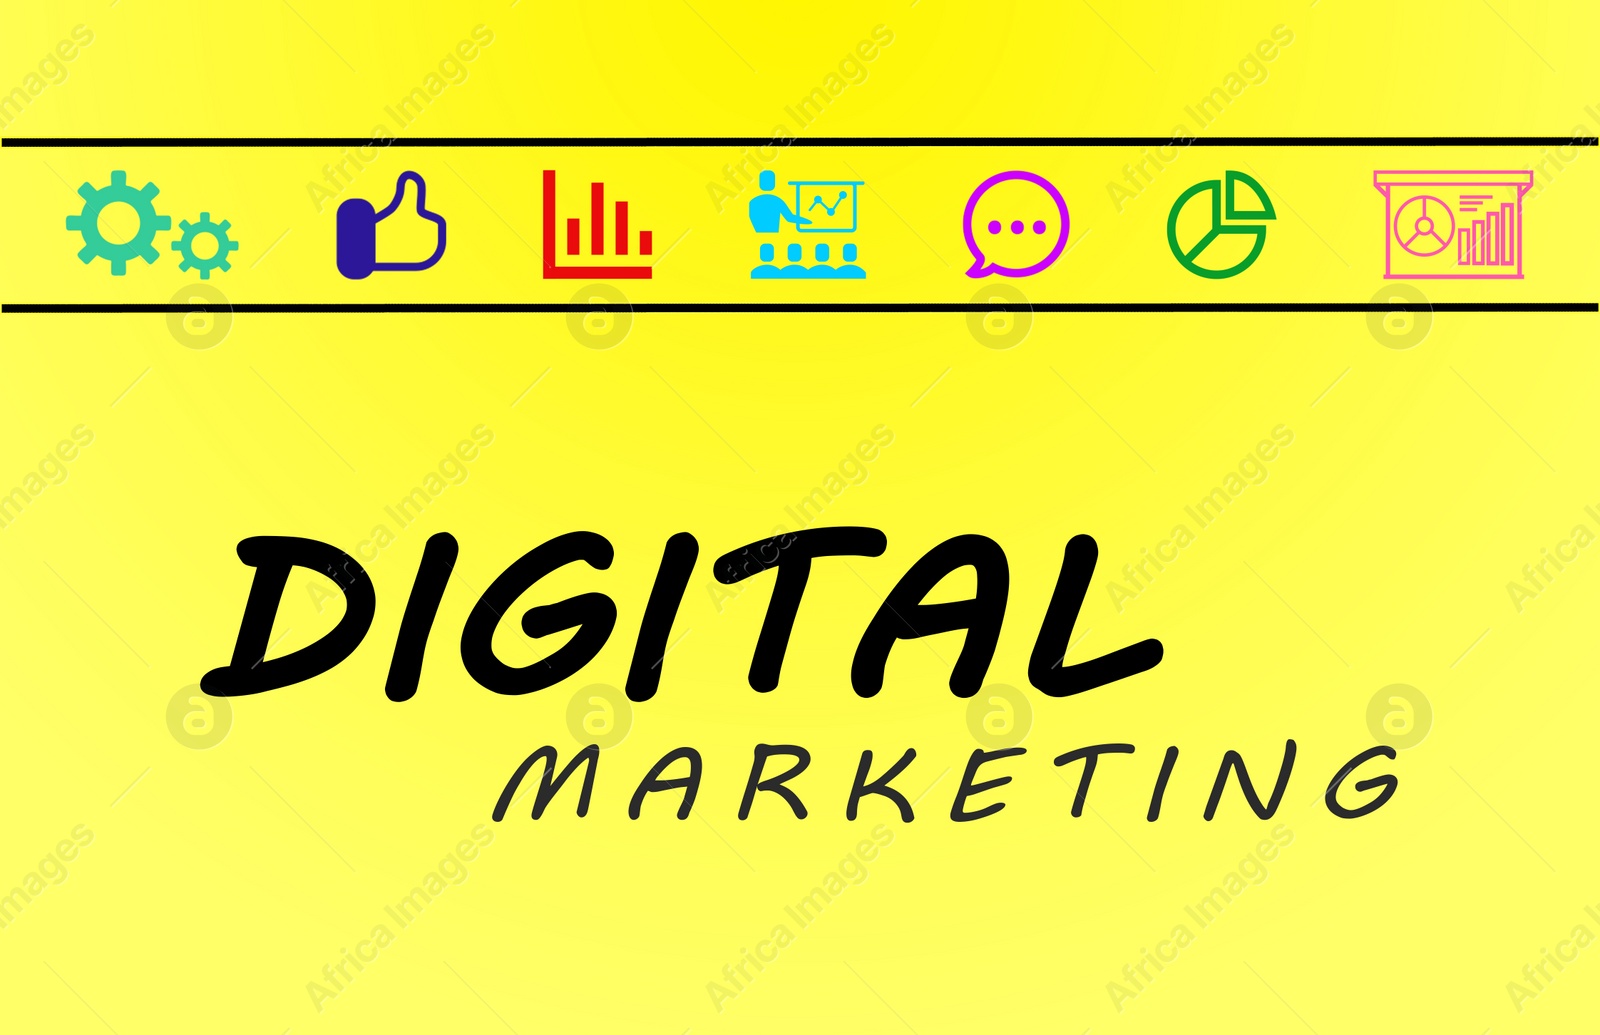 Illustration of Digital marketing strategy. Icons on yellow background